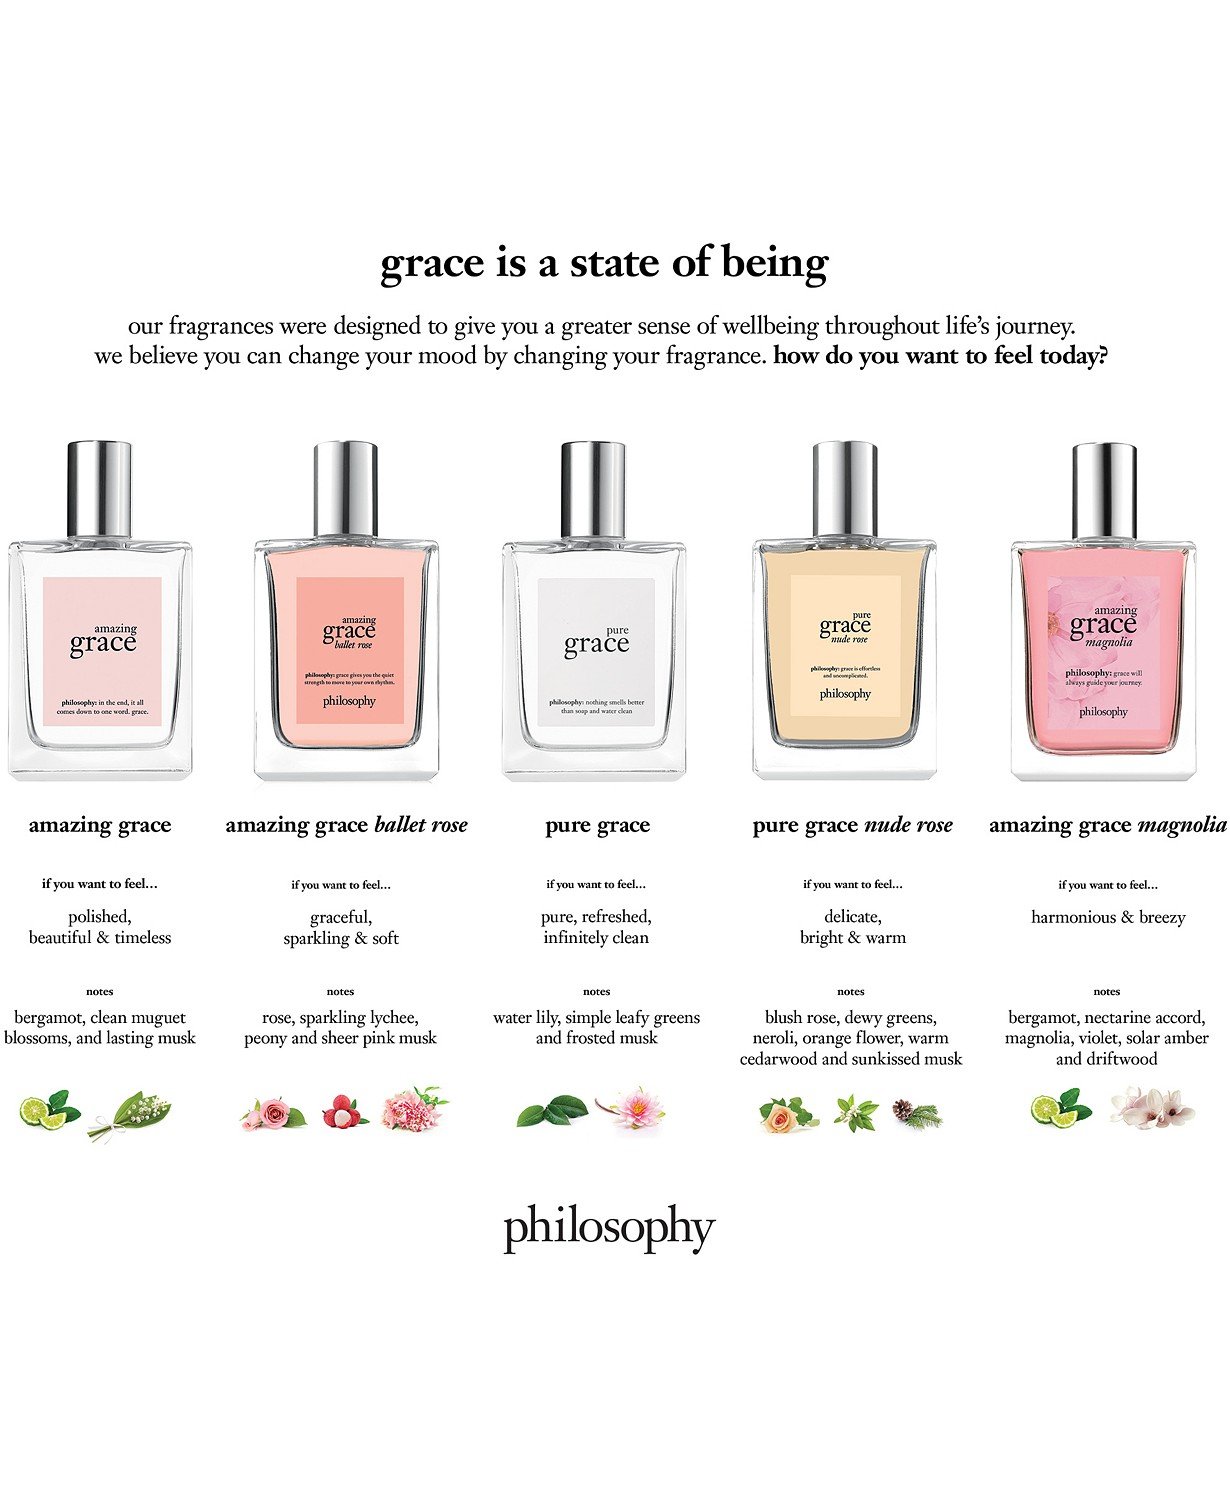 philosophy amazing grace magnolia spray fragrance - eCosmeticWorld